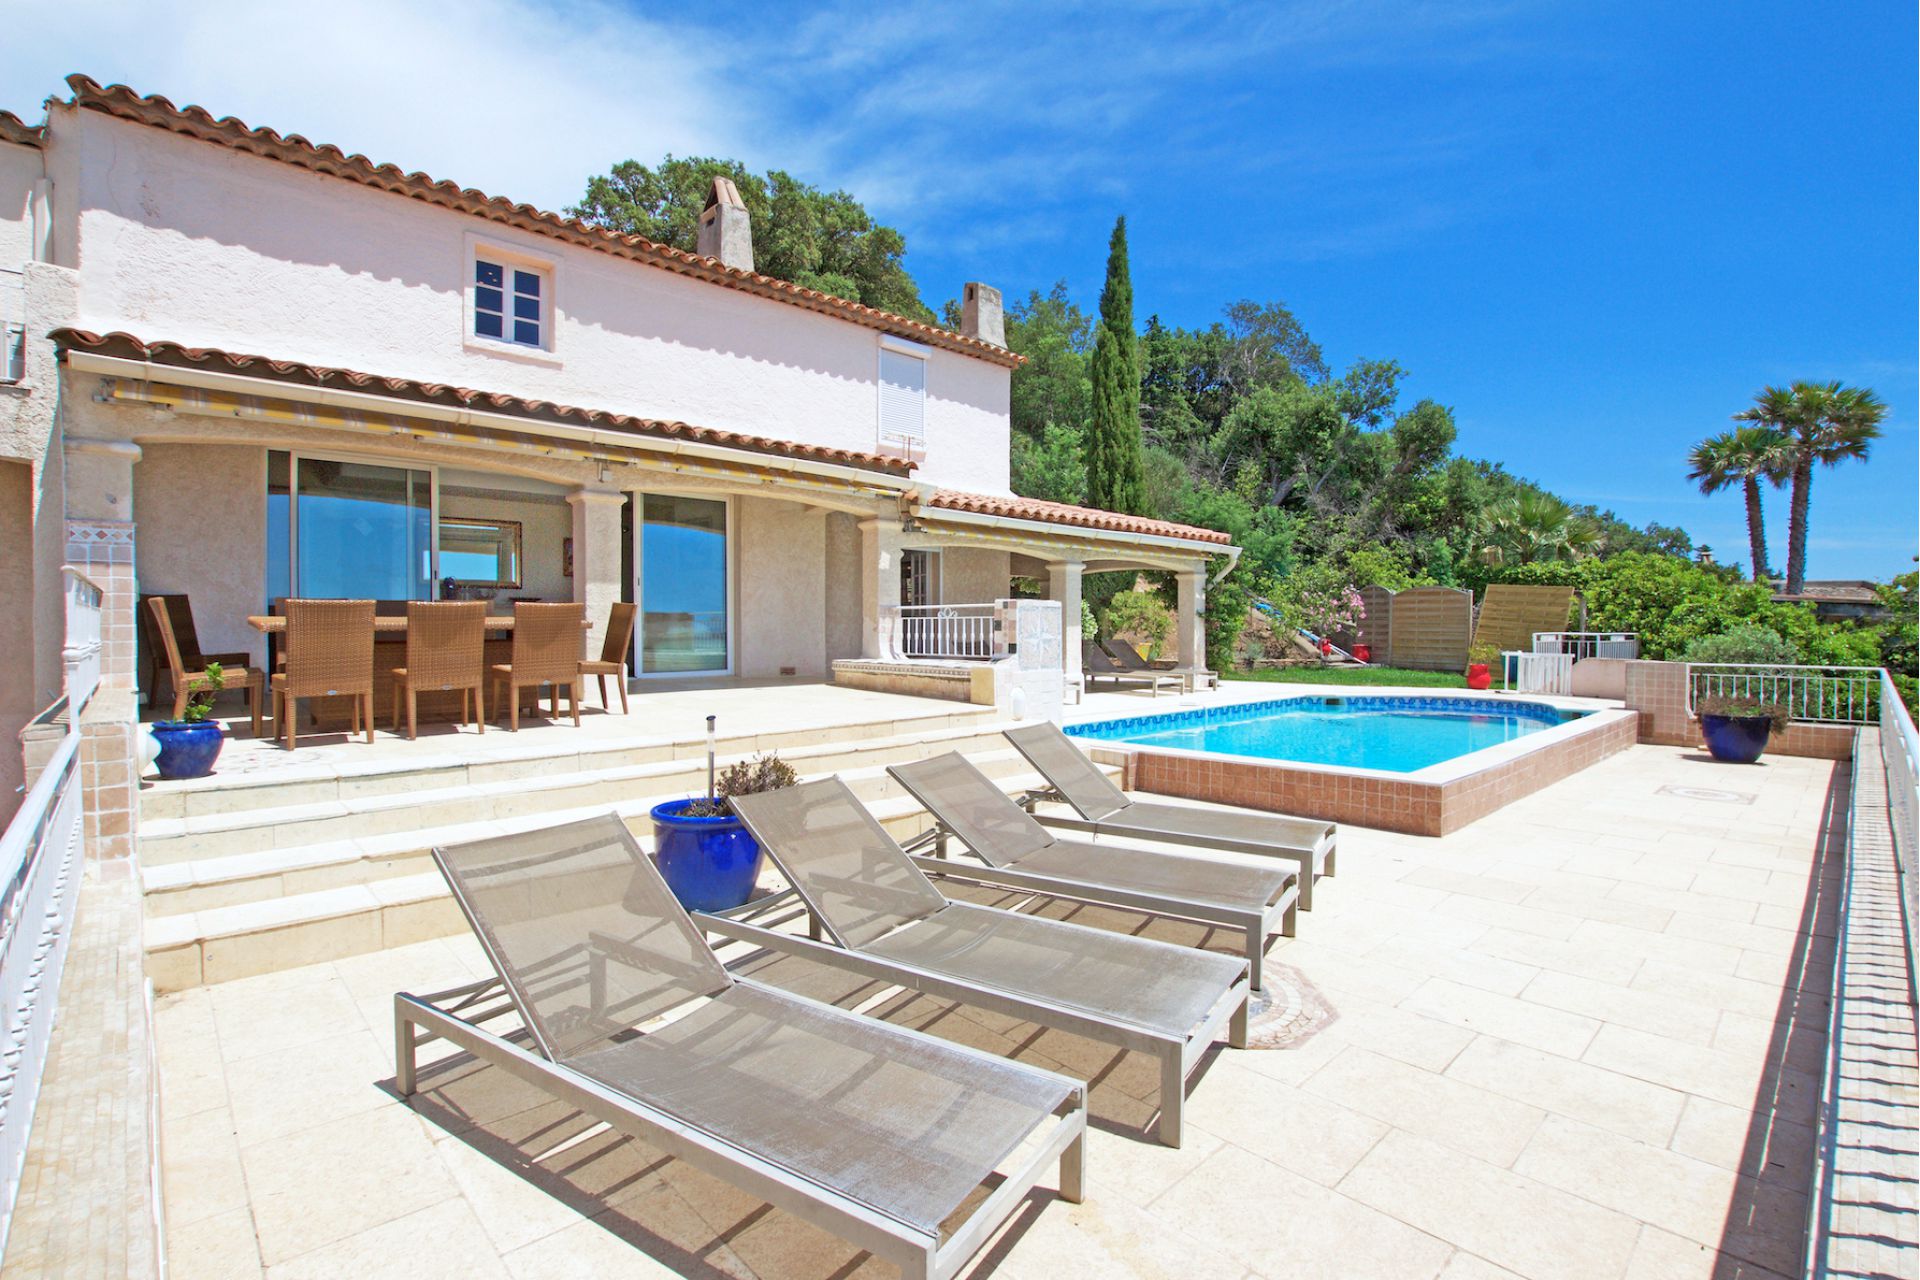 Méditerranée Location Mas with Private pool in Grimaud, Côte d'Azur